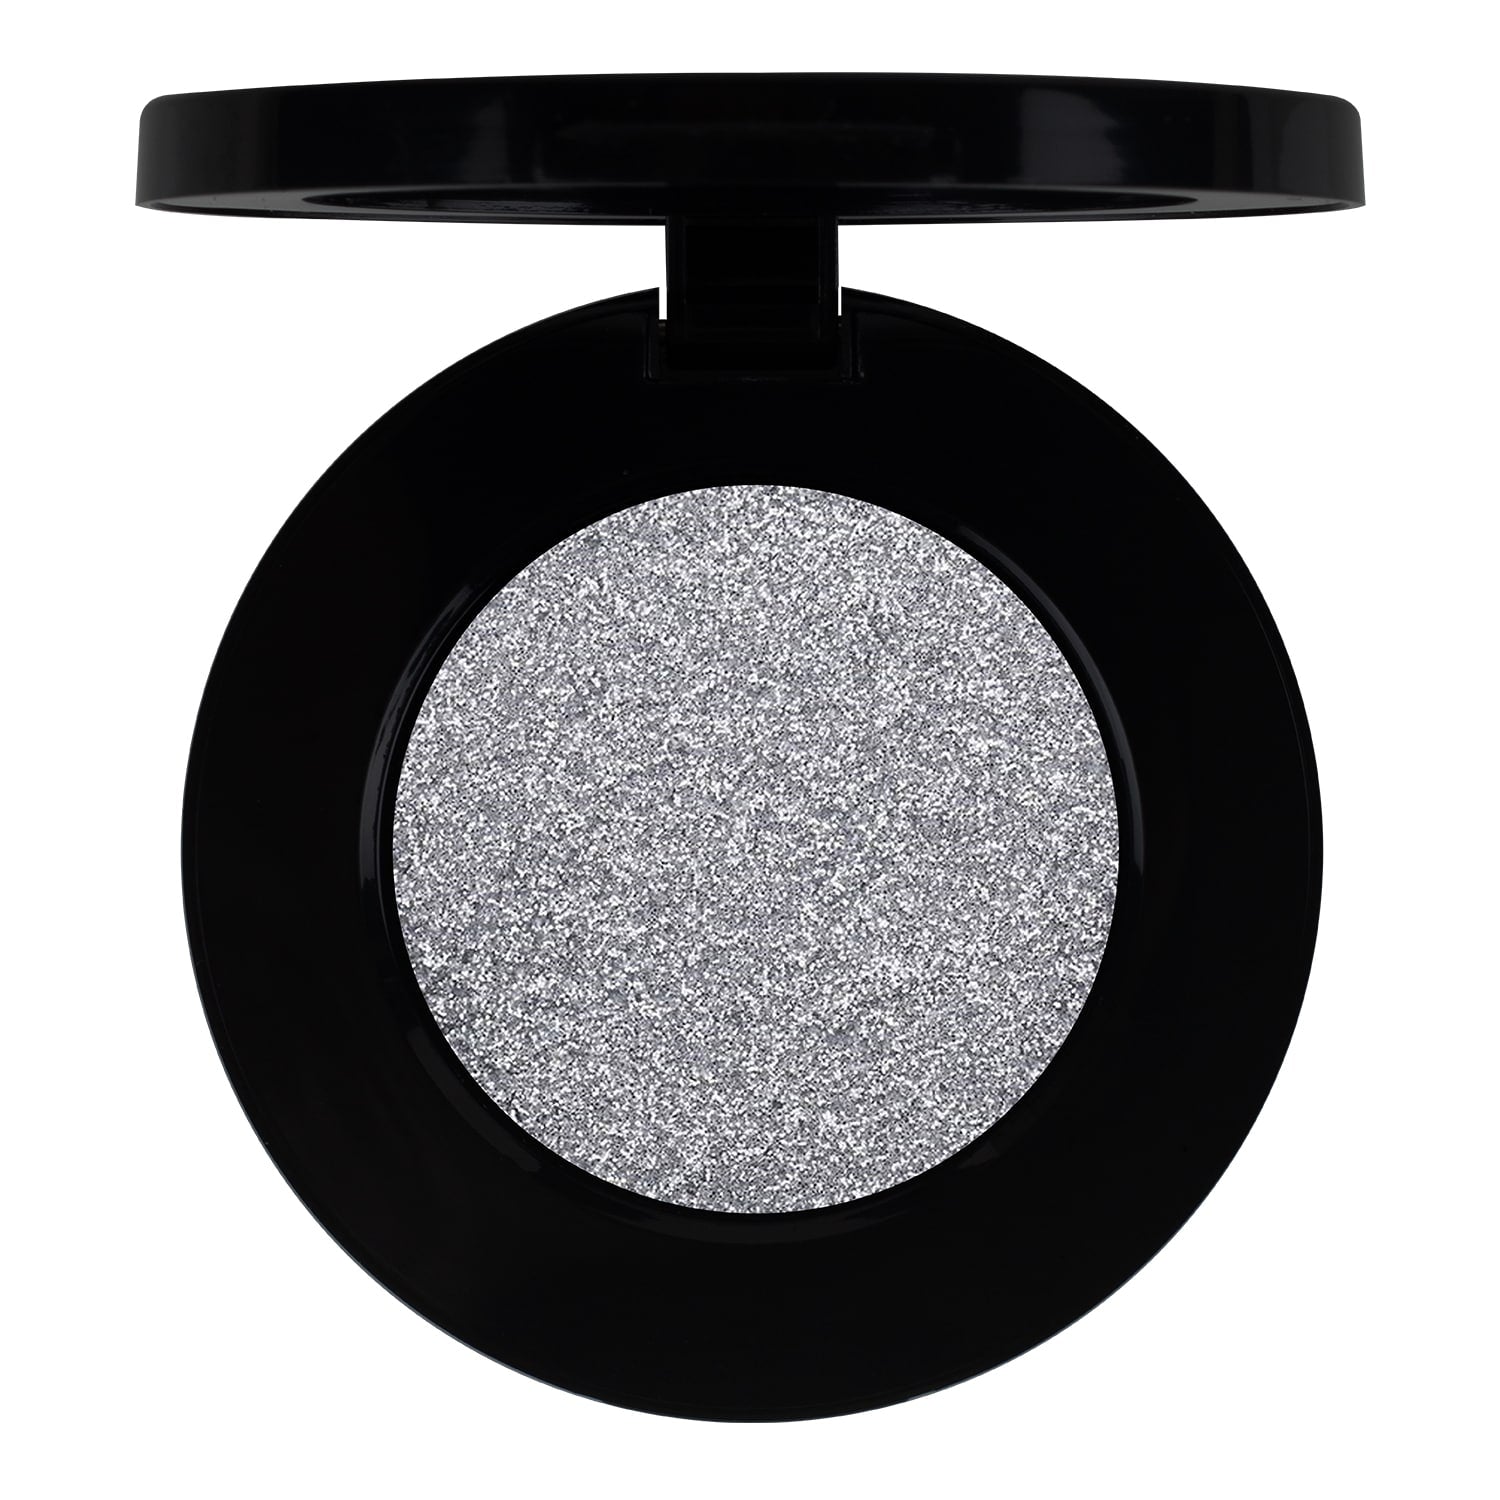 PAC Pressed Glitter Eyeshadow - 01 (Starry Night) PAC